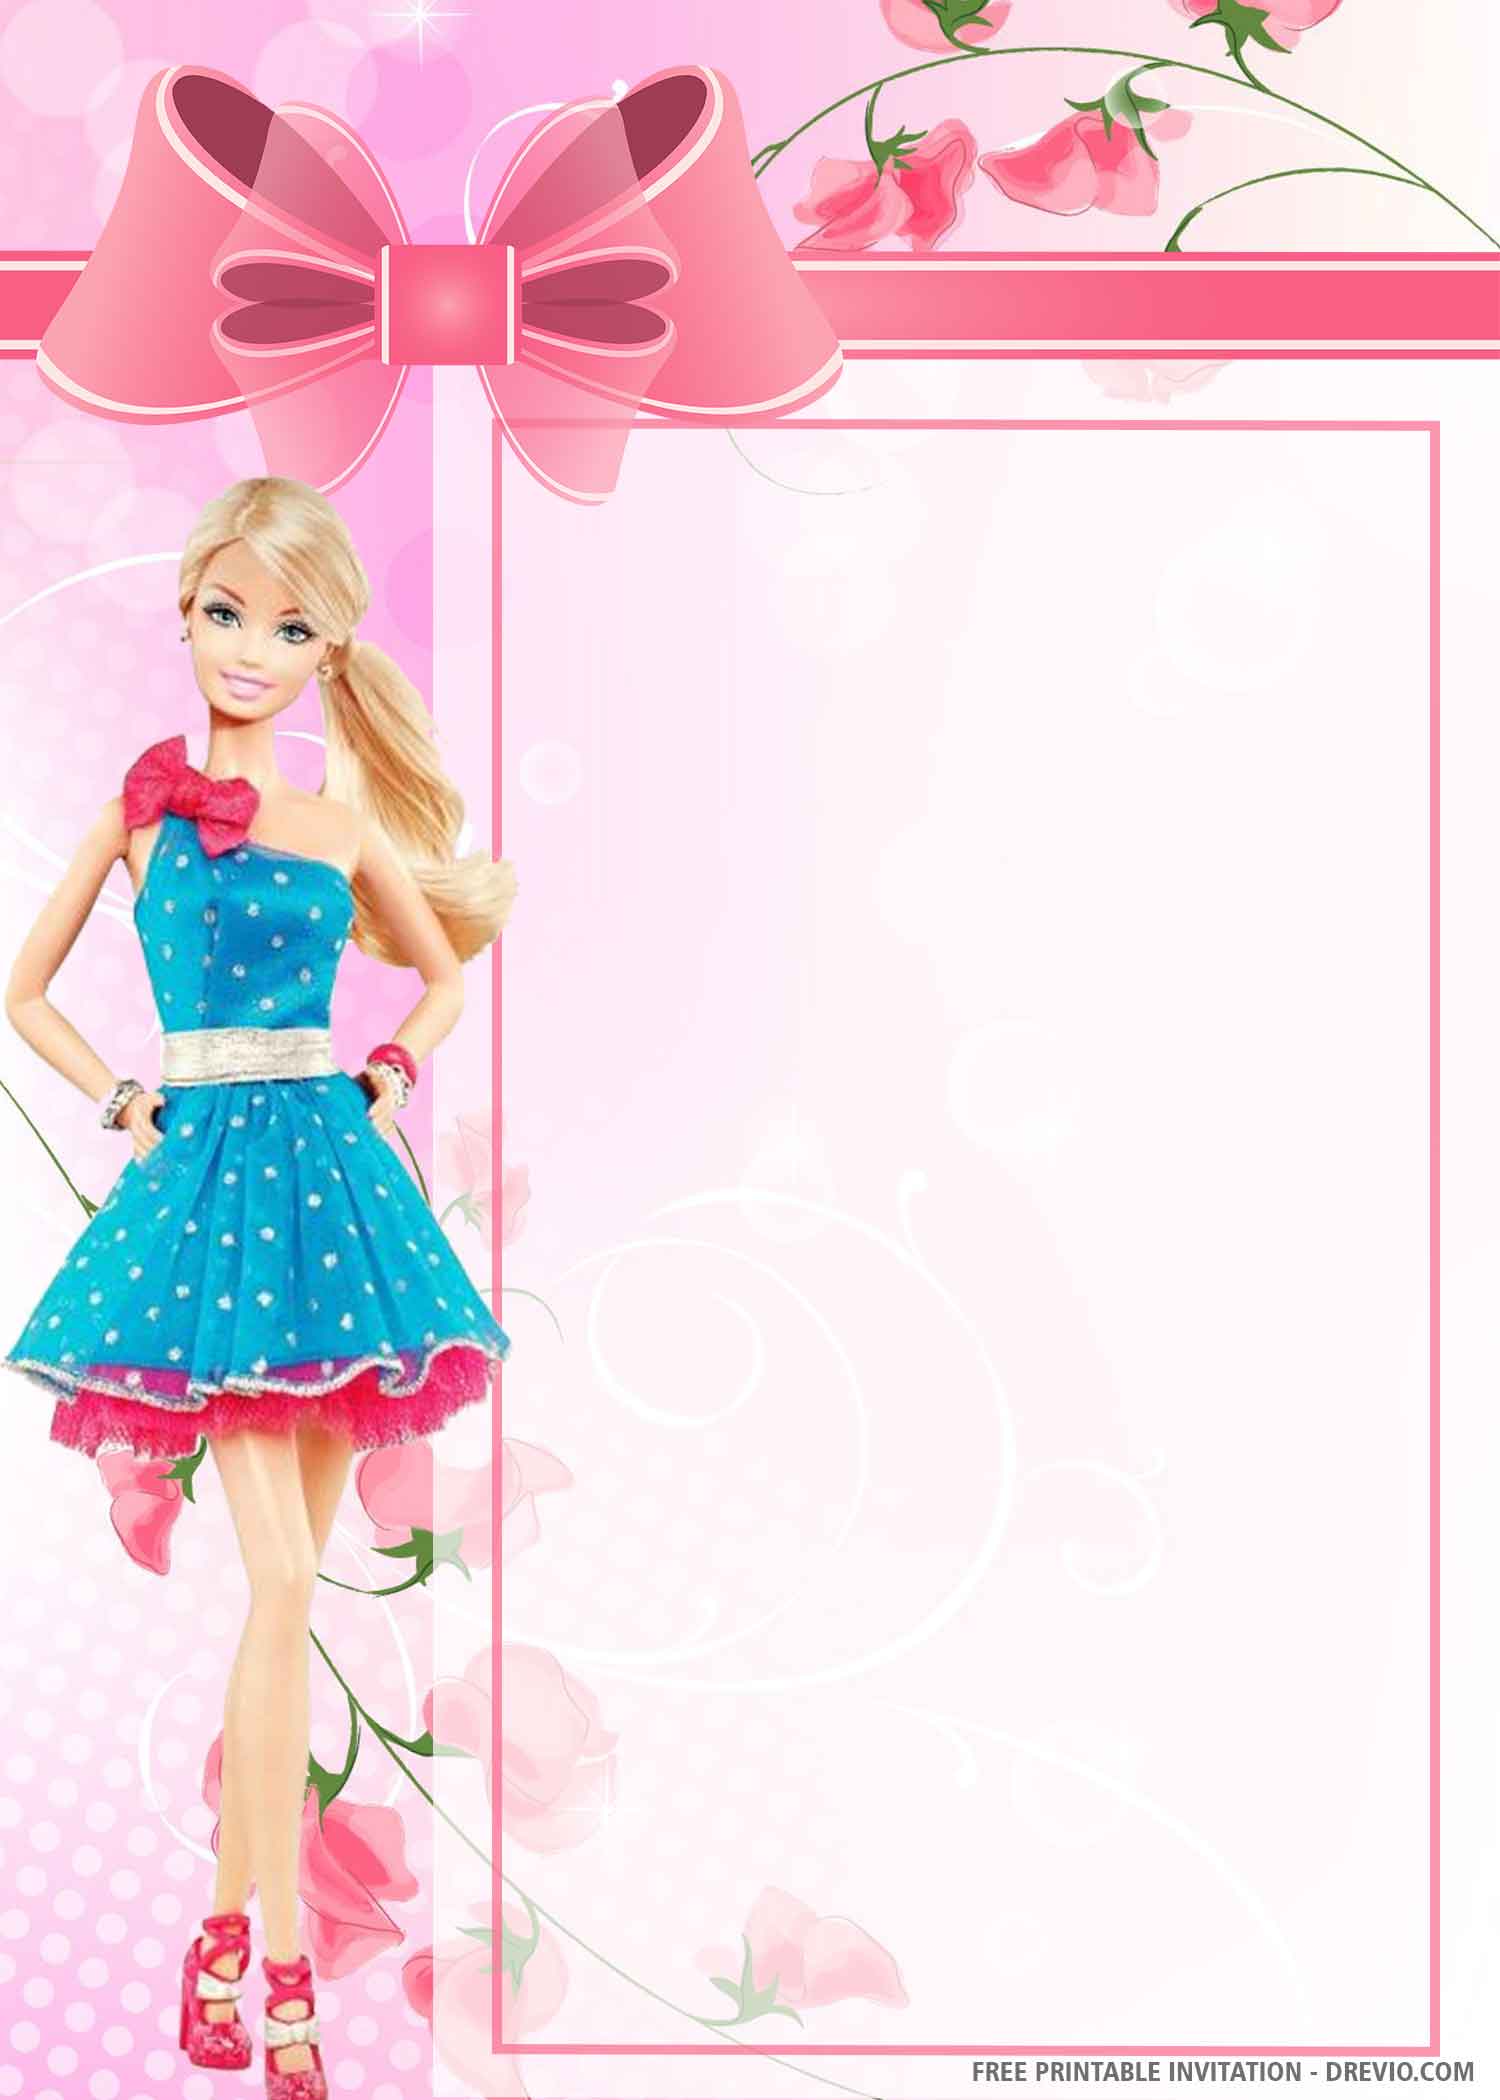 (FREE PRINTABLE) Barbie Dream House Birthday Invitation Templates